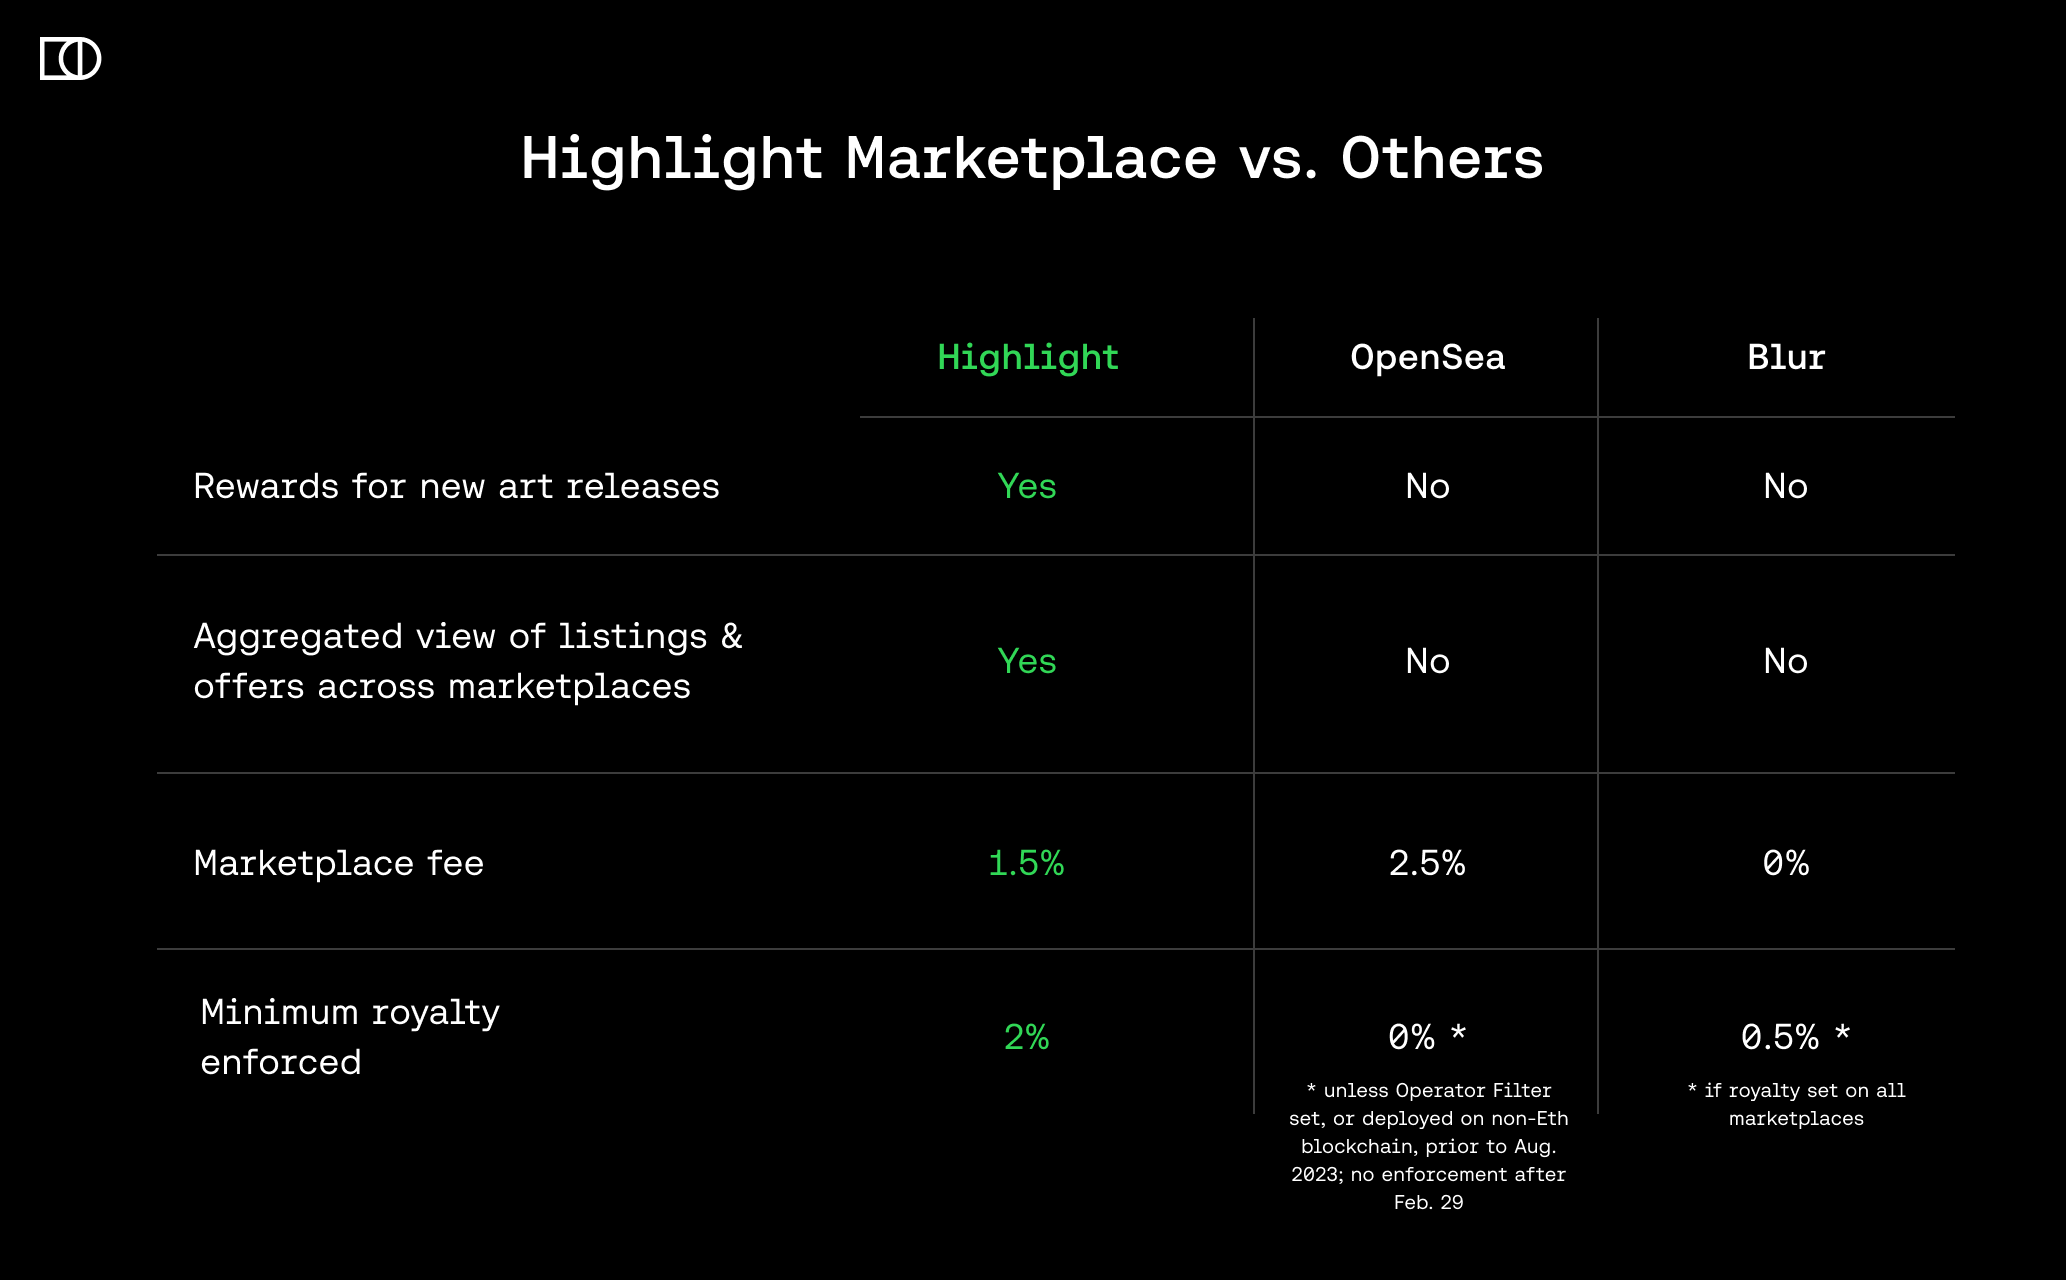 Highlight Marketplace vs. OpenSea vs. Blur